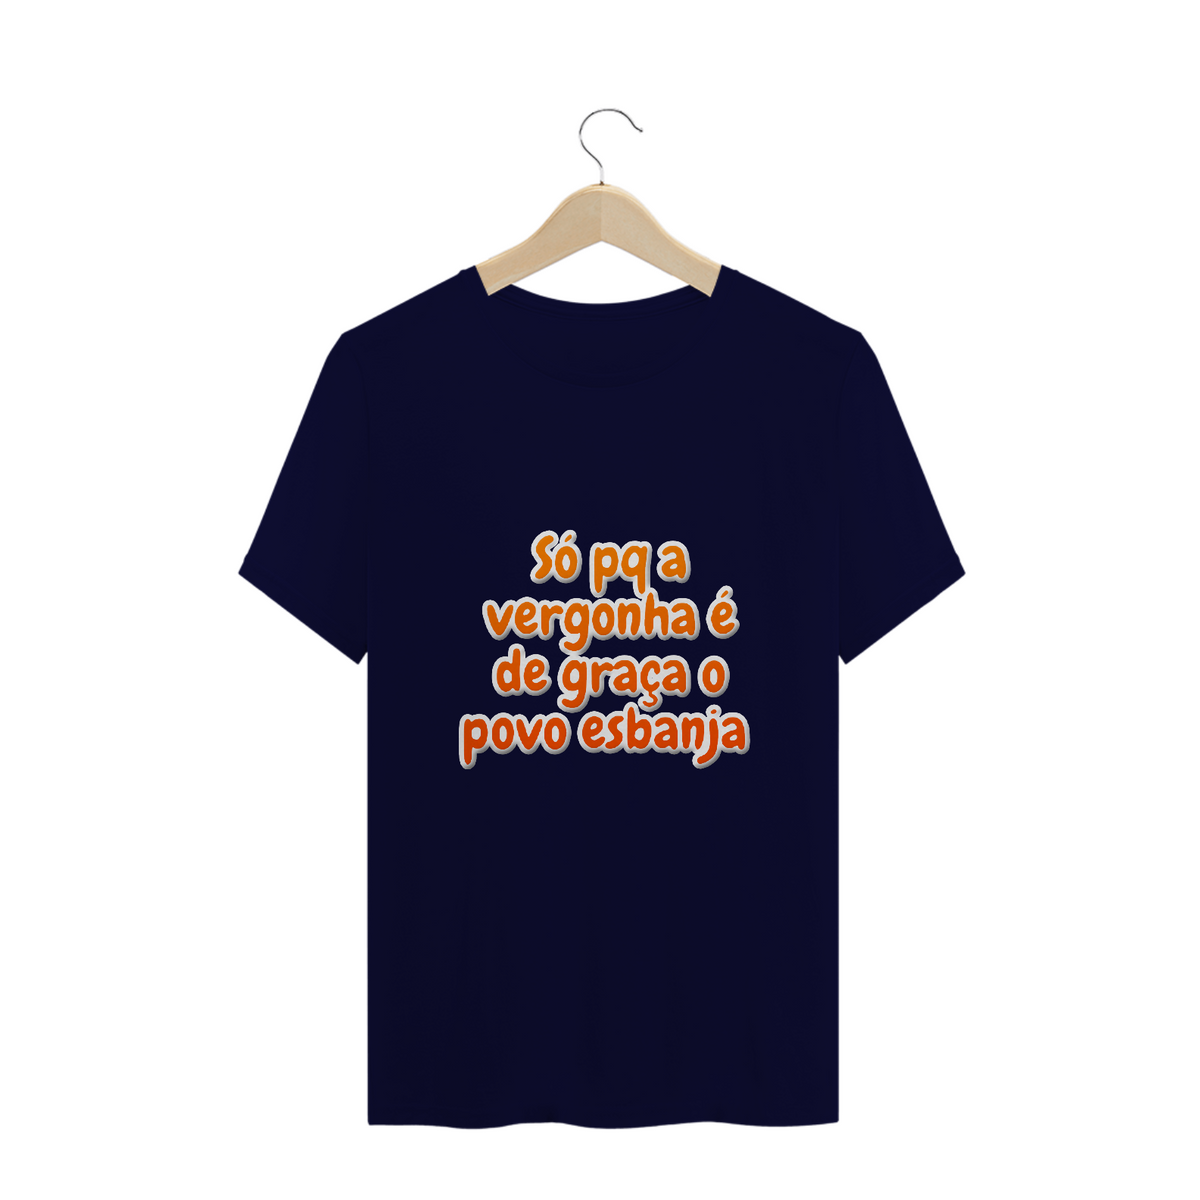 Nome do produto: Esbanja Vergonha - T-Shirt Plus Size